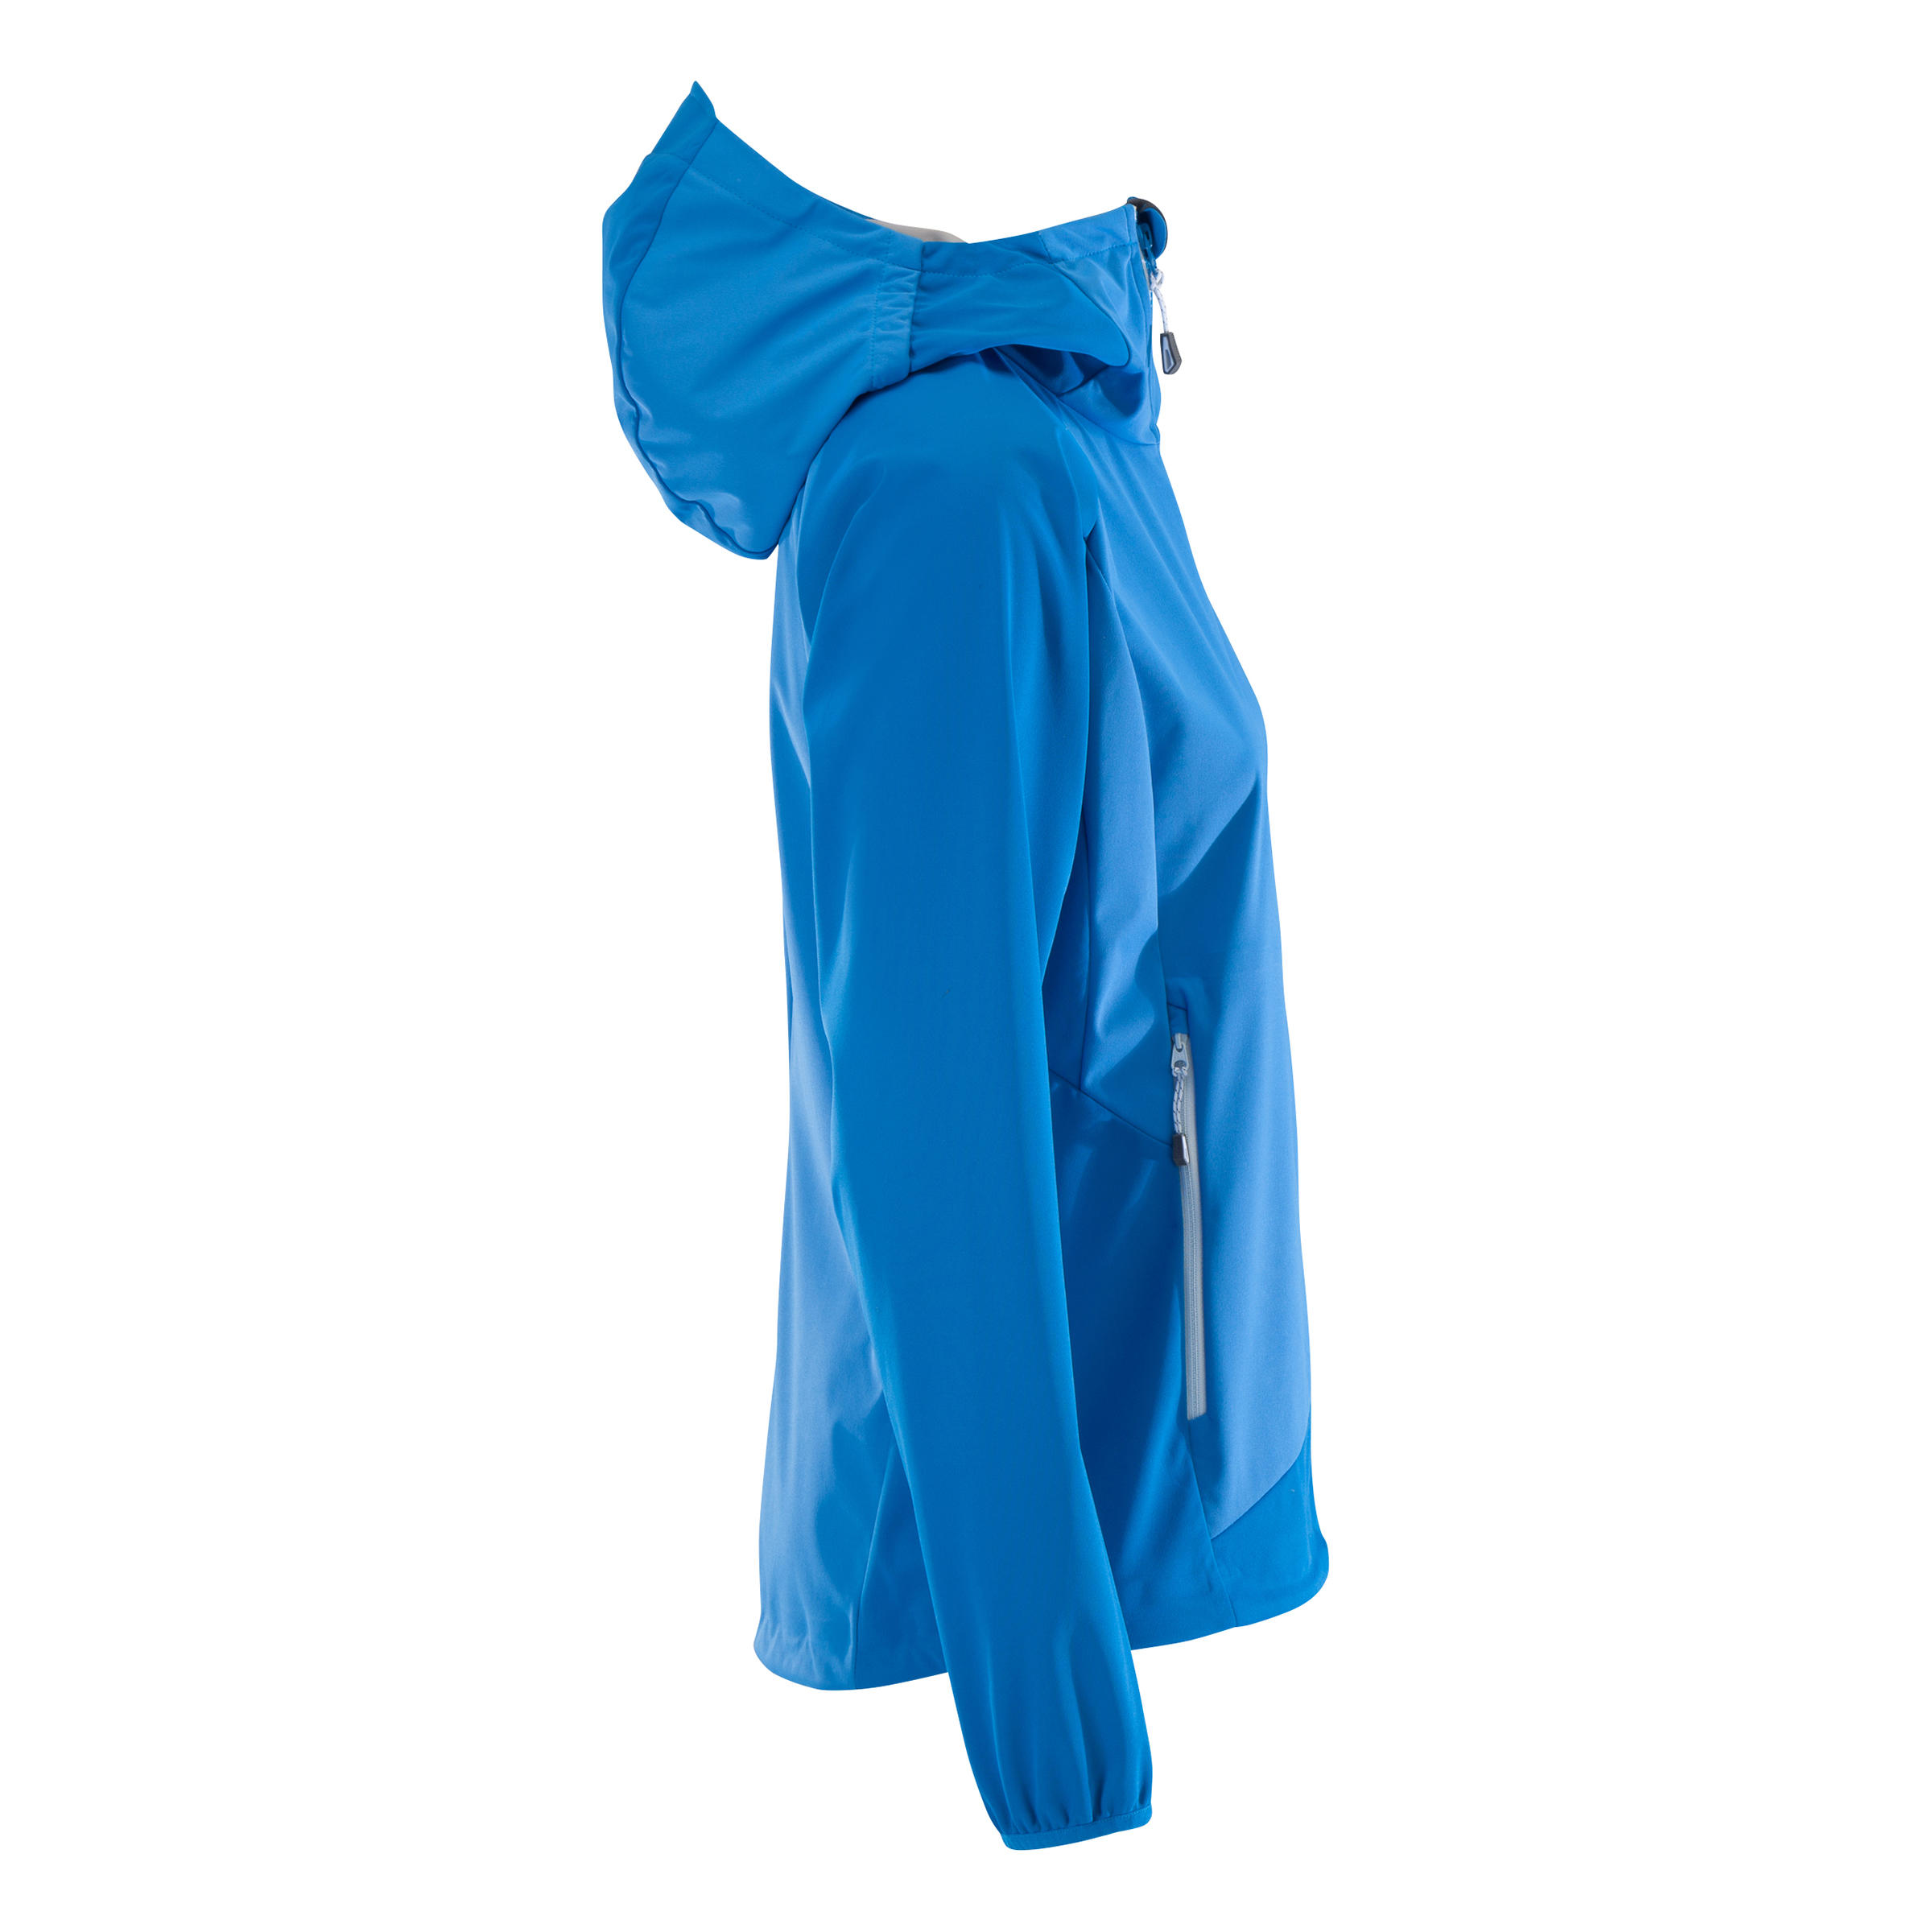 Women's Mountaineering Softshell Jacket - Alpinism Light Blue 4/11